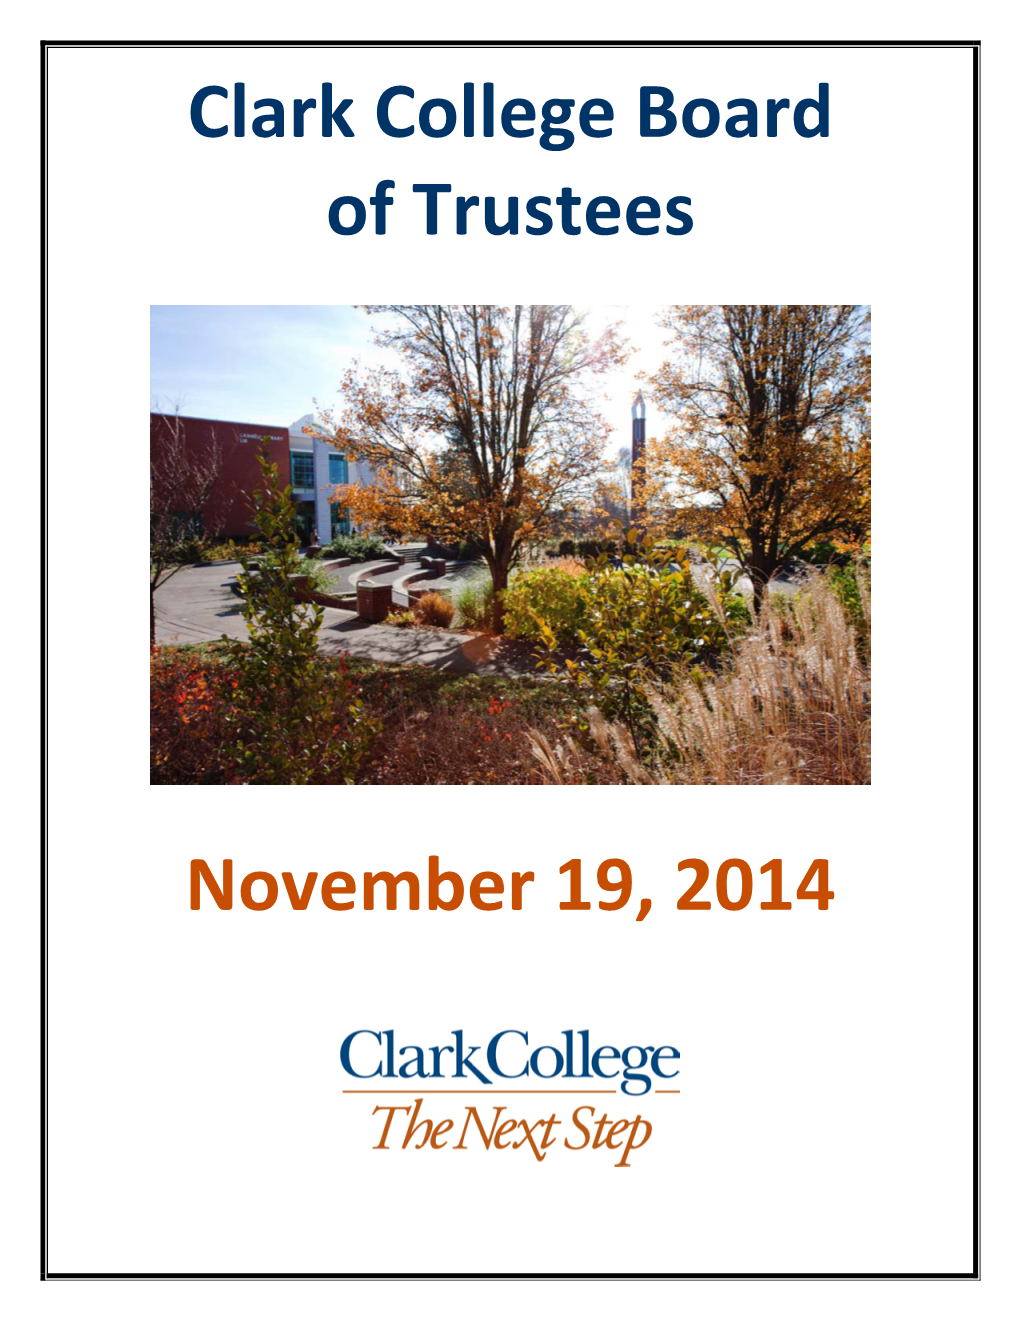 Clark College Board of Trustees November 19, 2014